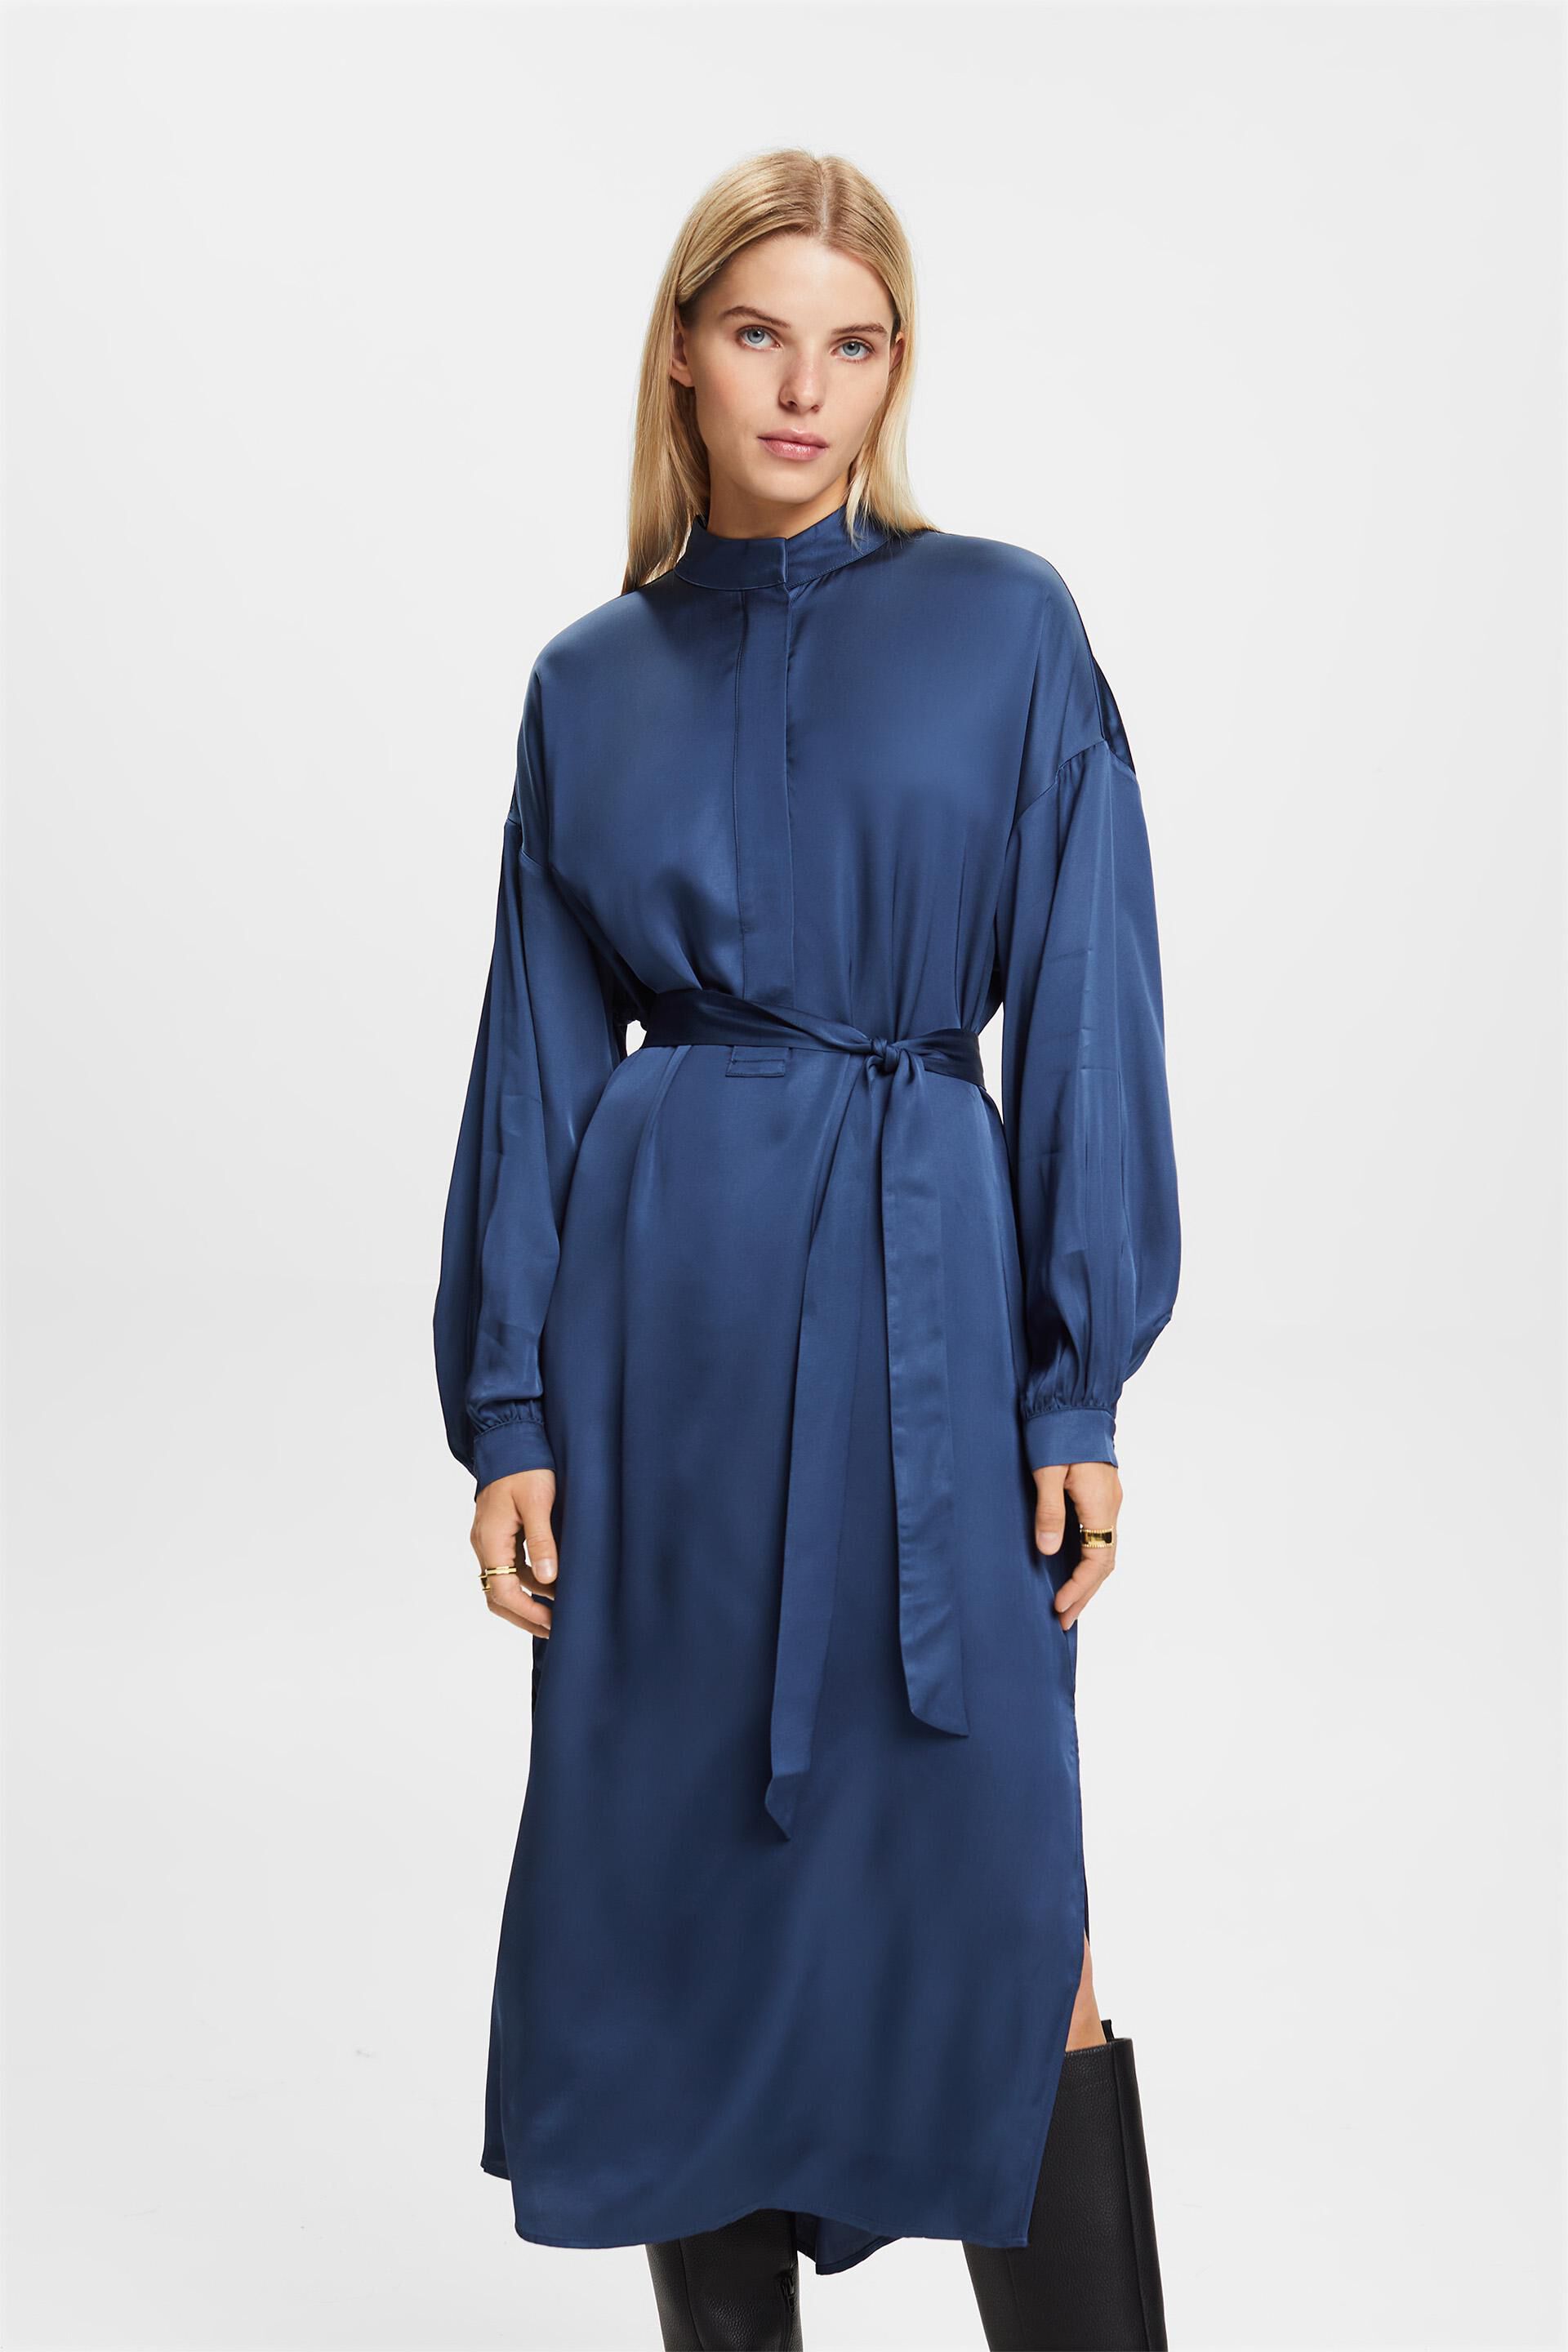 New Look oversized satin shirt dress in blue | ASOS